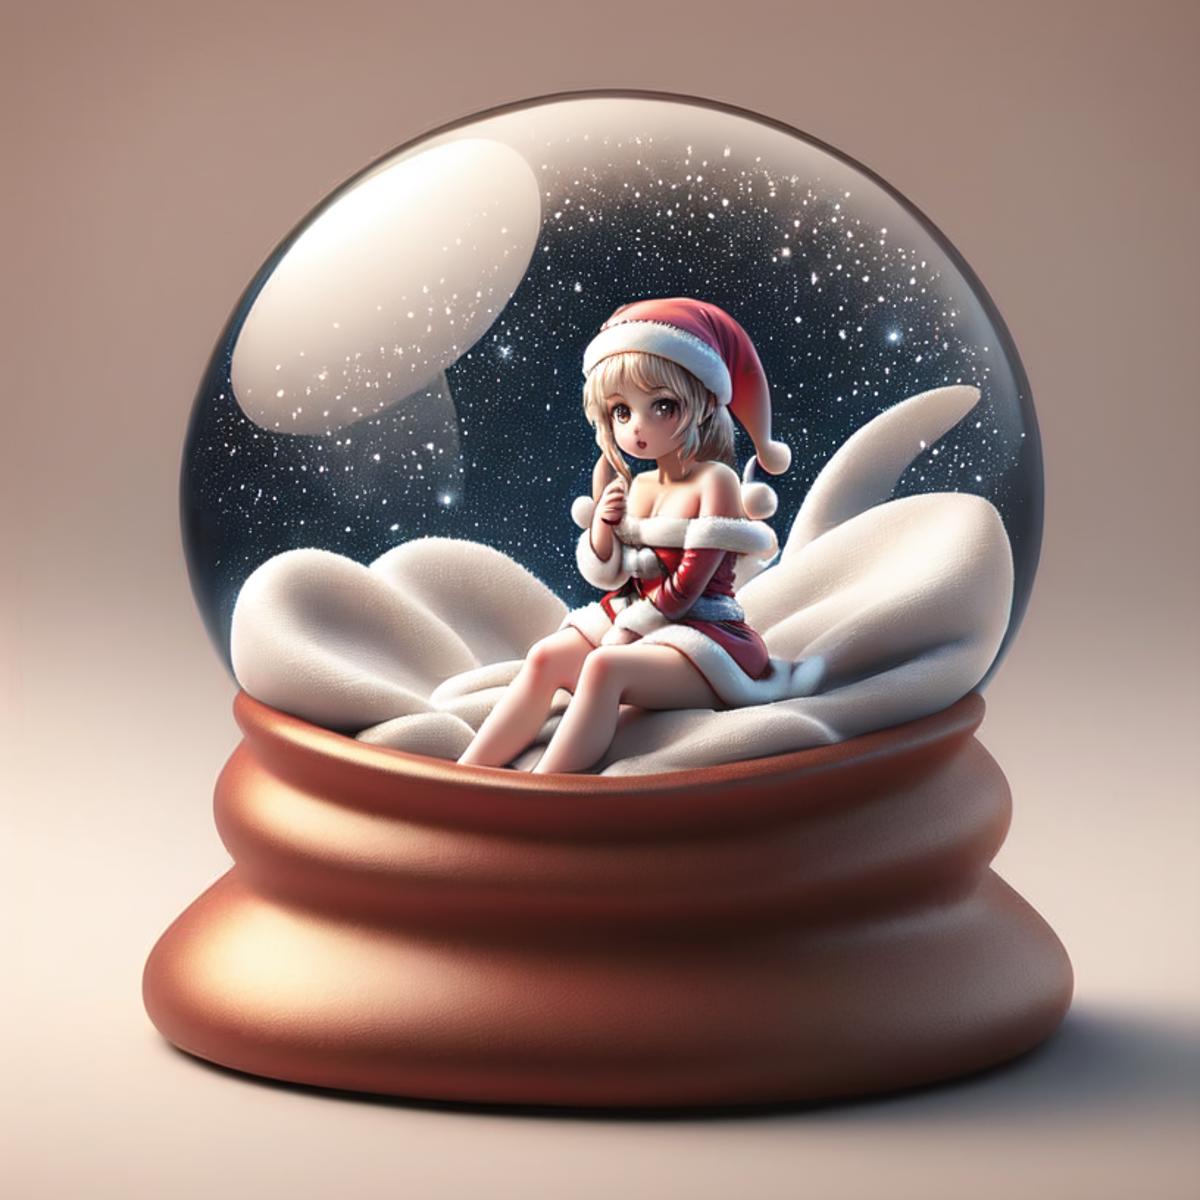 Crystal Ball/Christmas crystal ball/Crystal Ball Gift/水晶球 image by celf999